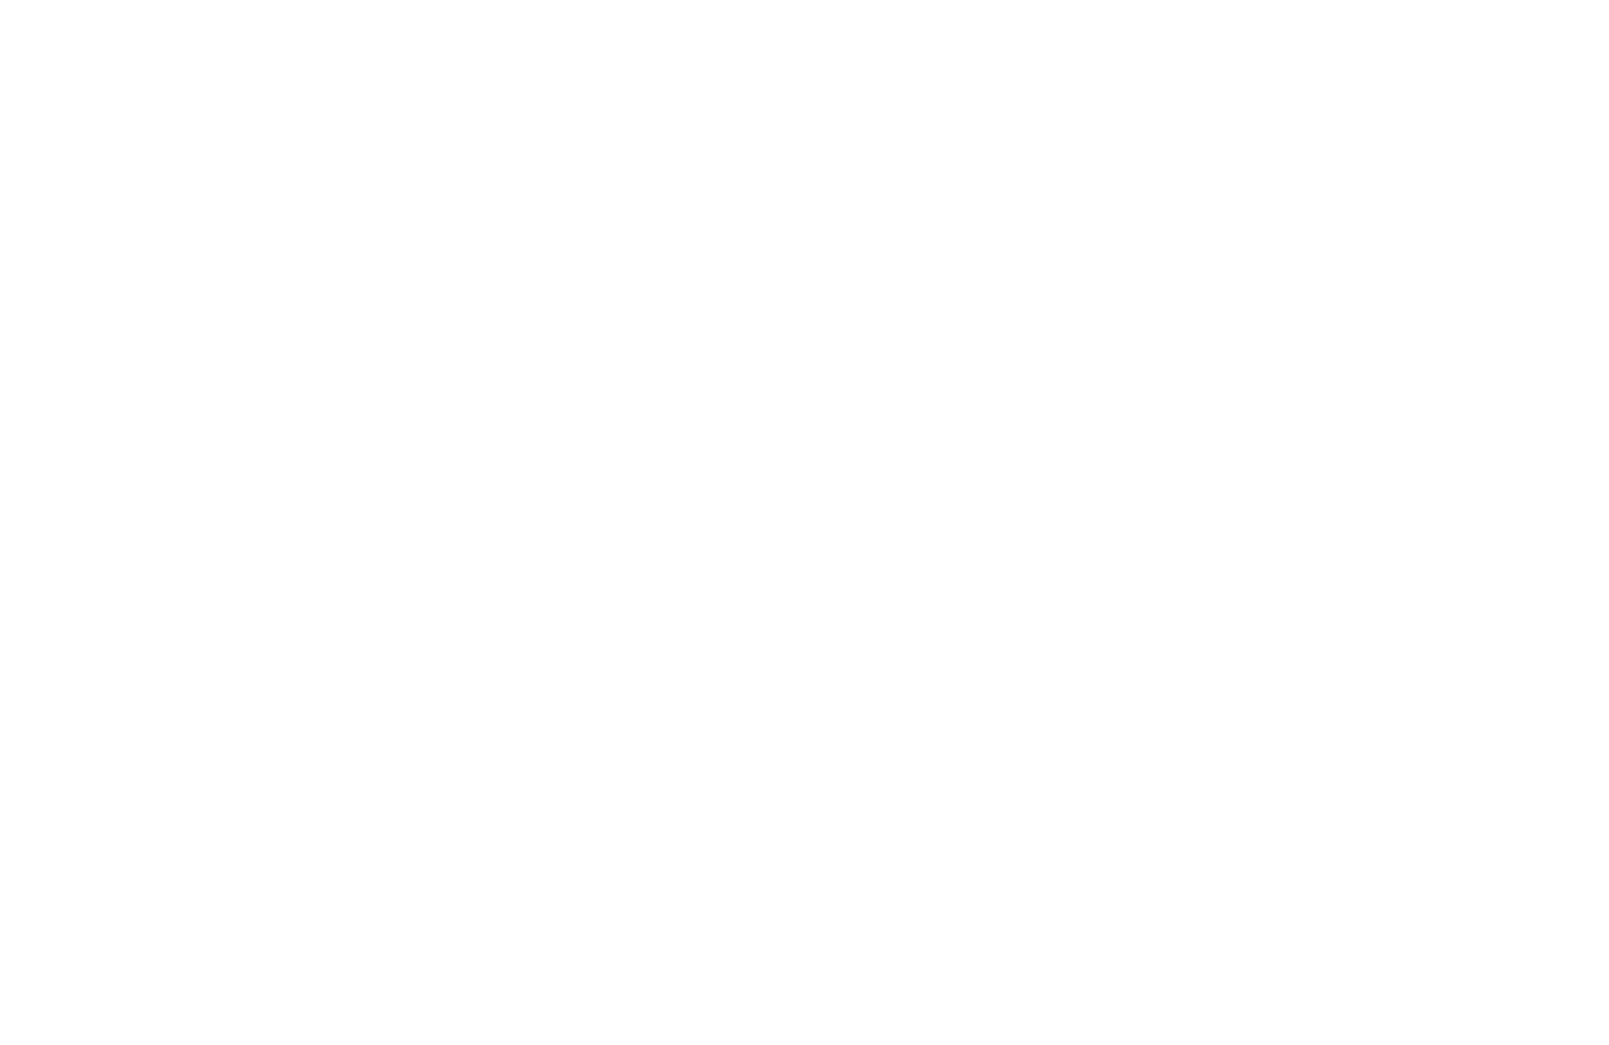 British American Tobacco logo pour fonds sombres (PNG transparent)